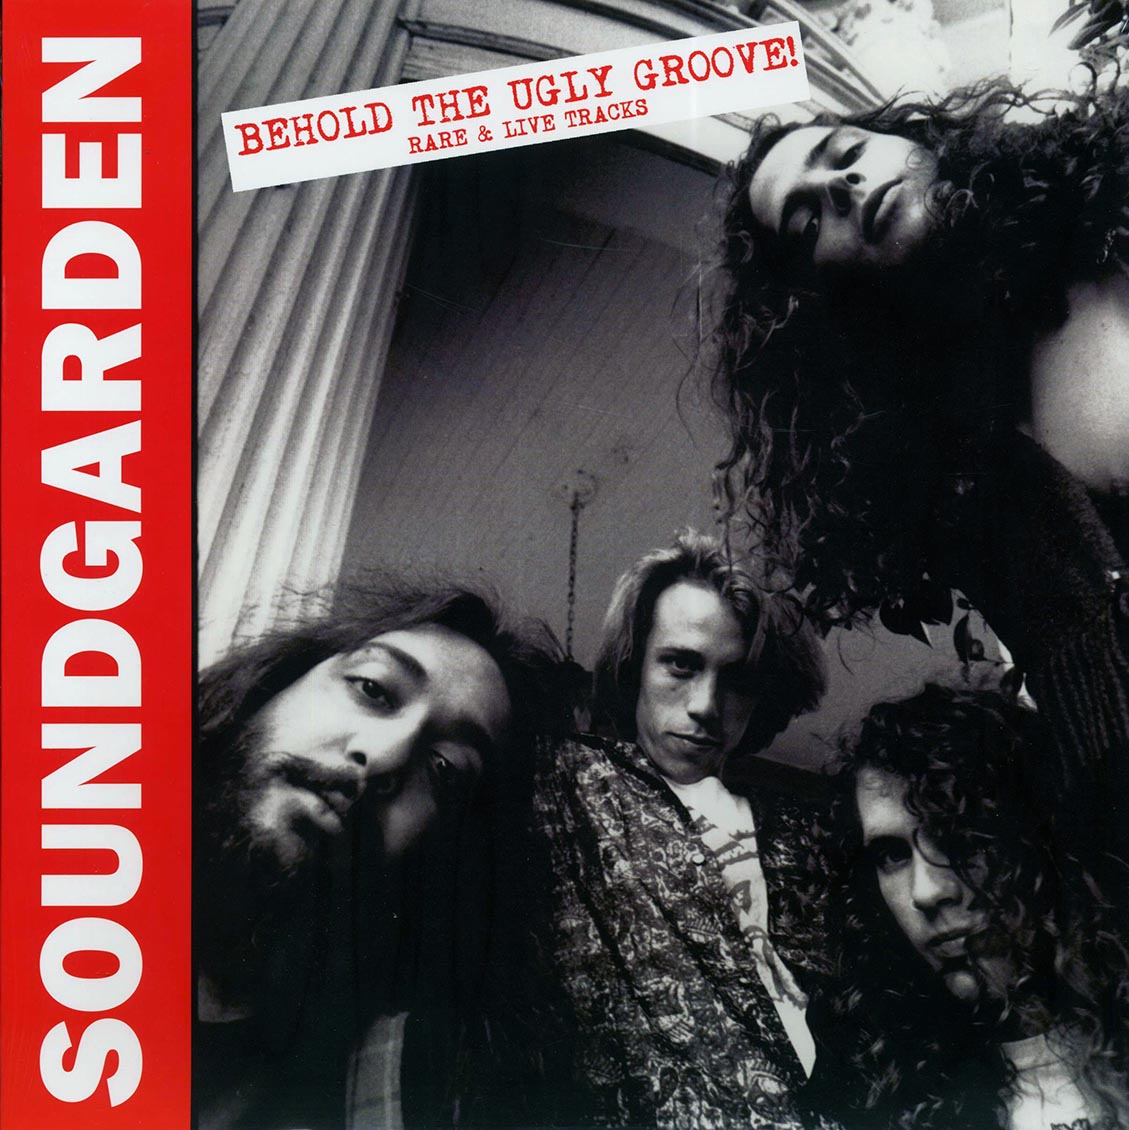 Soundgarden - Behold The Ugly Groove: Rare & Live Tracks - Vinyl LP